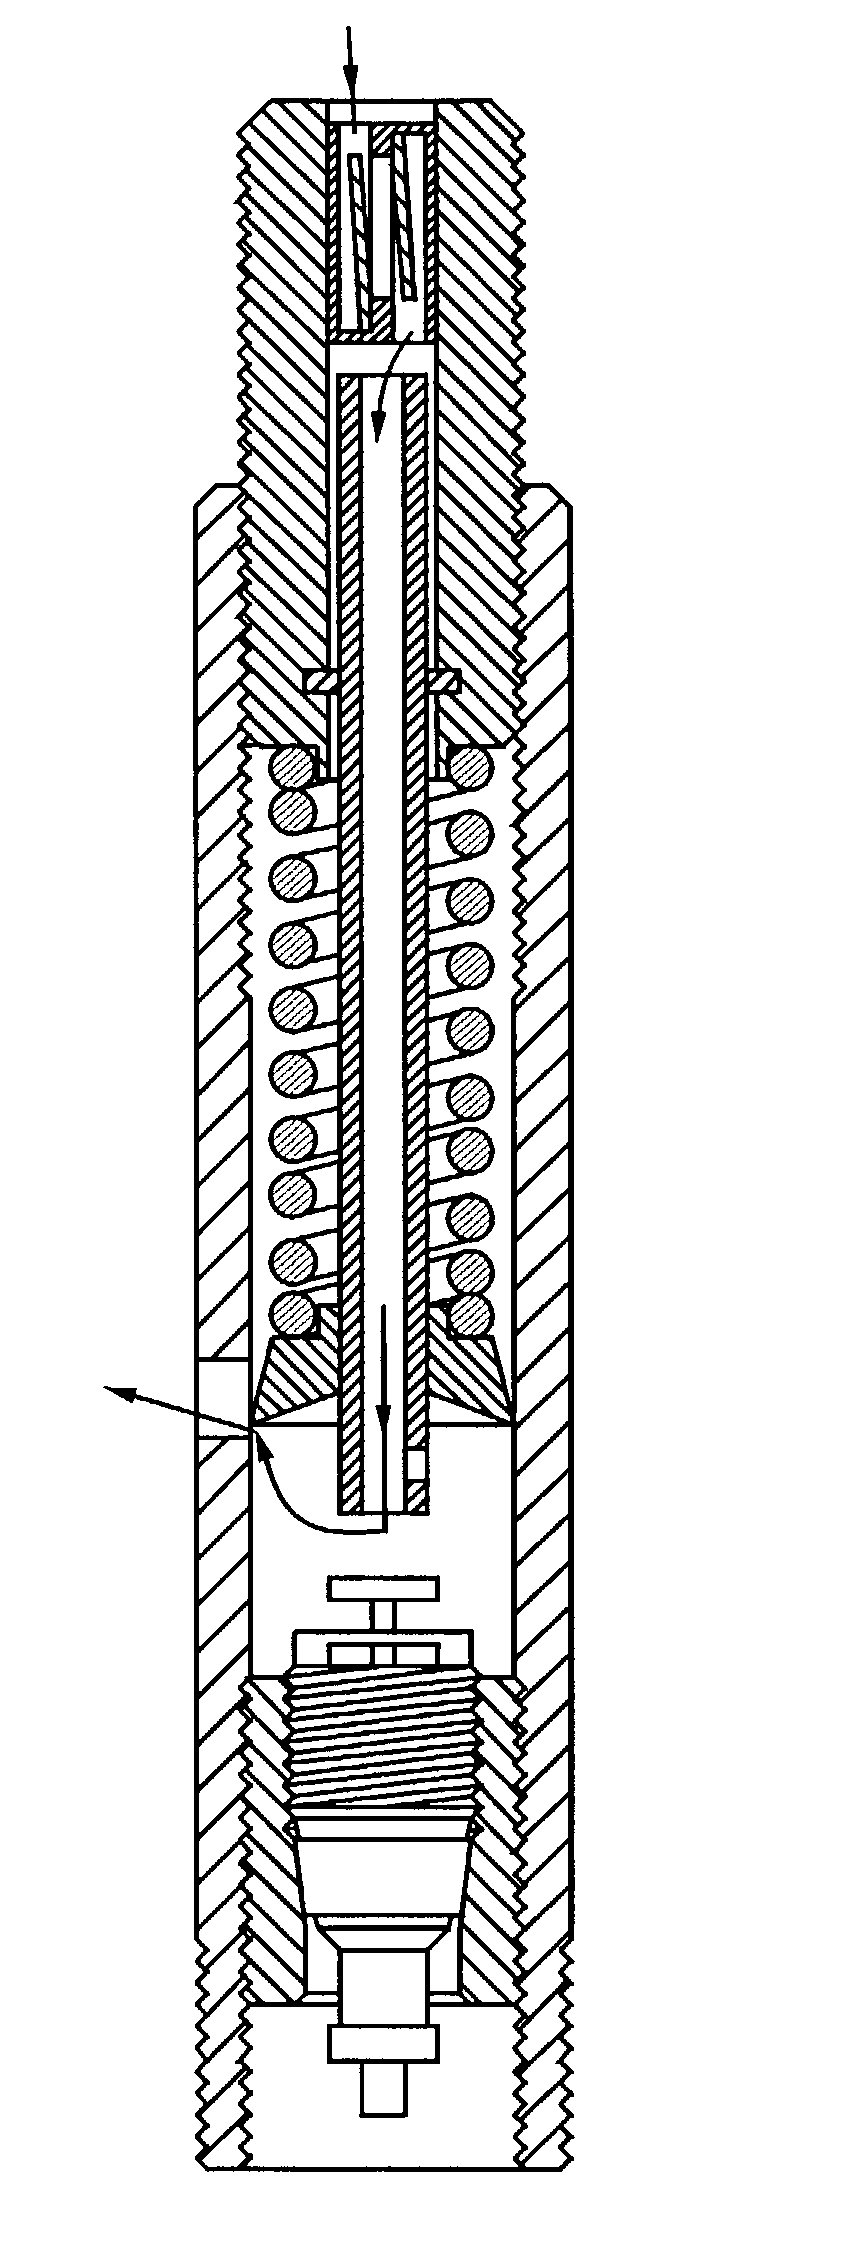 Pressure regulator and method of use